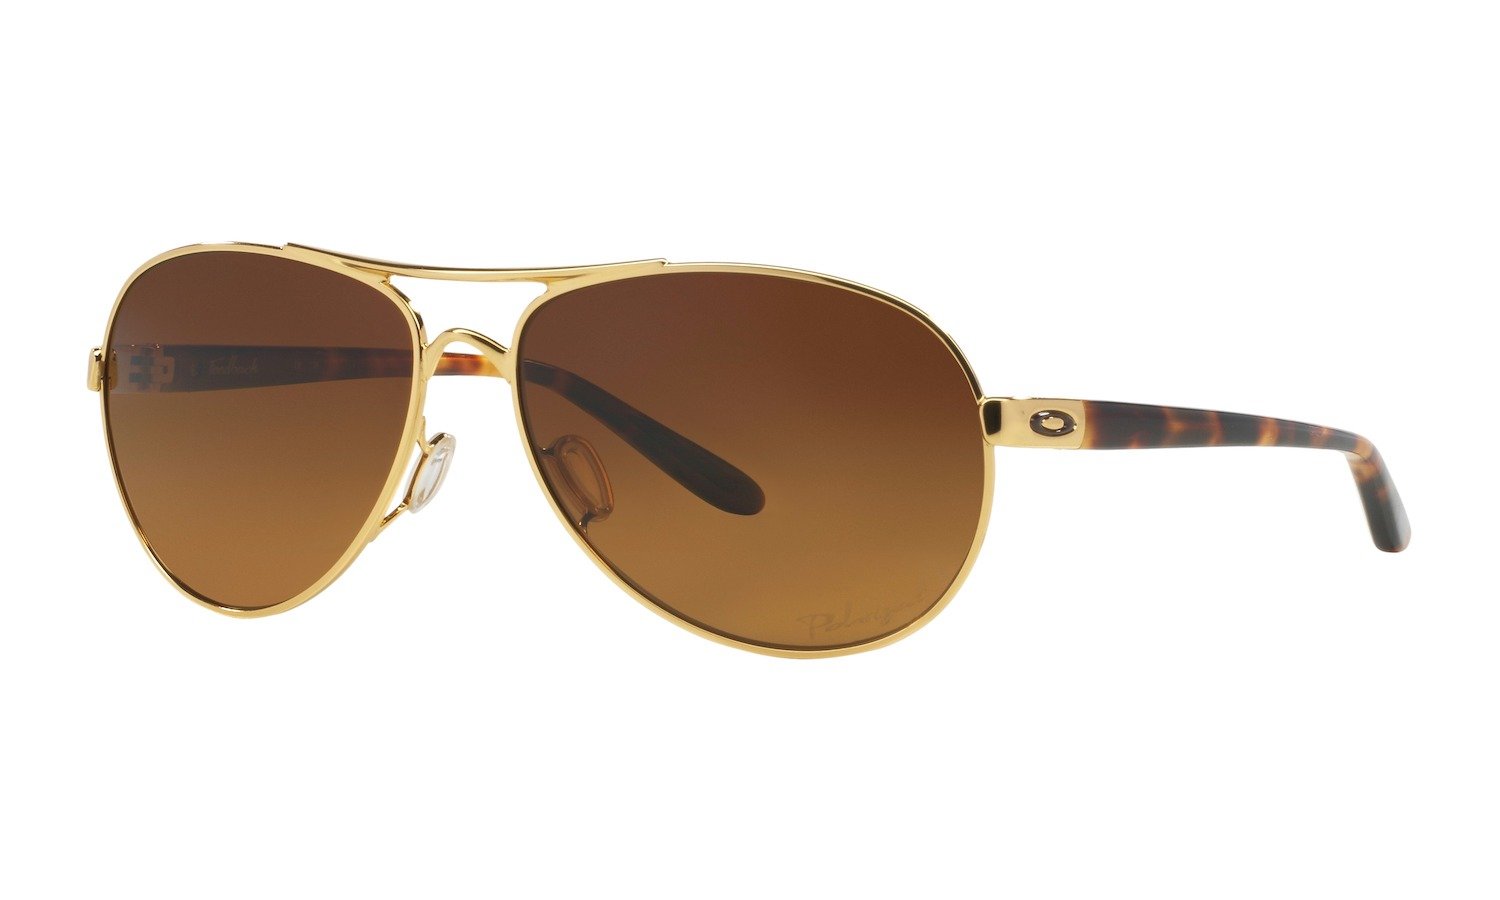 Feedback Prizm Sapphire Polarized Lenses, Polished Chrome Frame Sunglasses